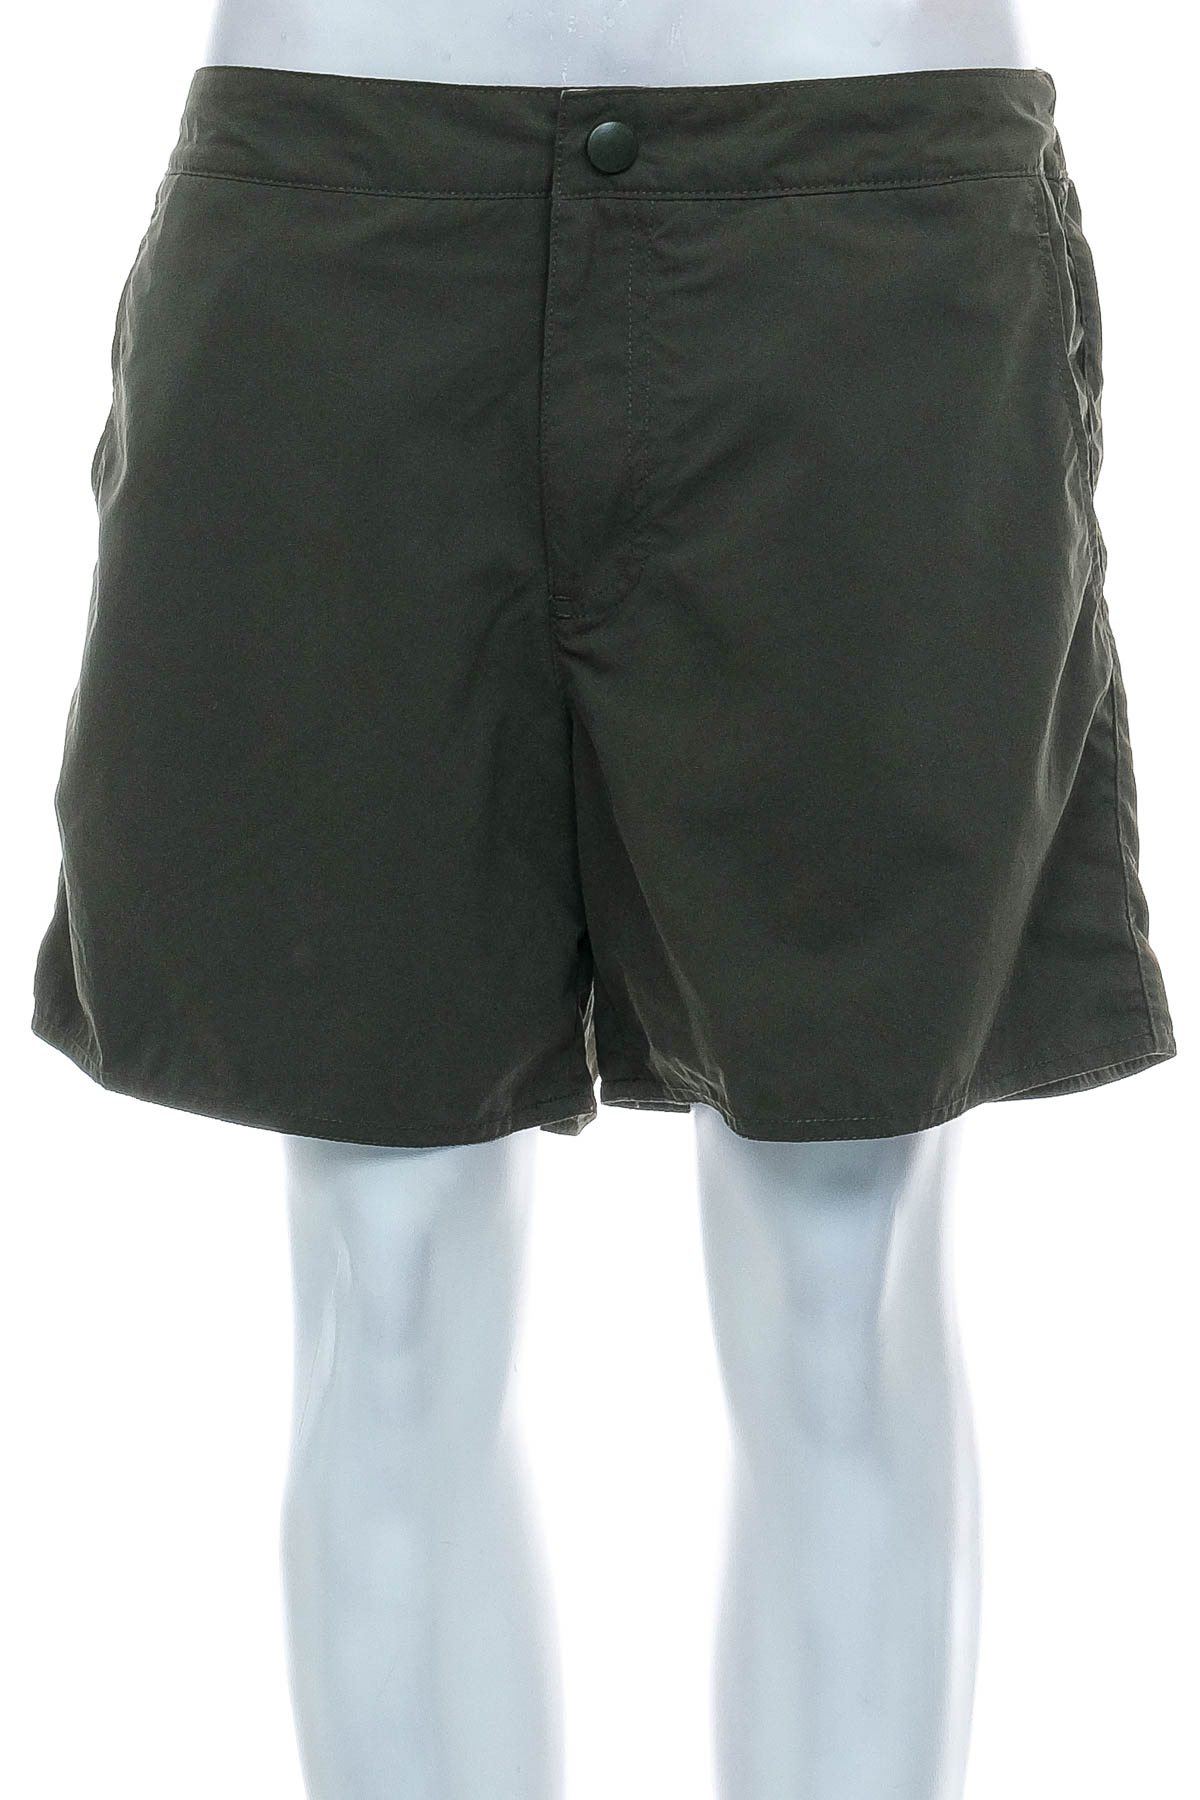 Men's shorts - CALZEDONIA - 0